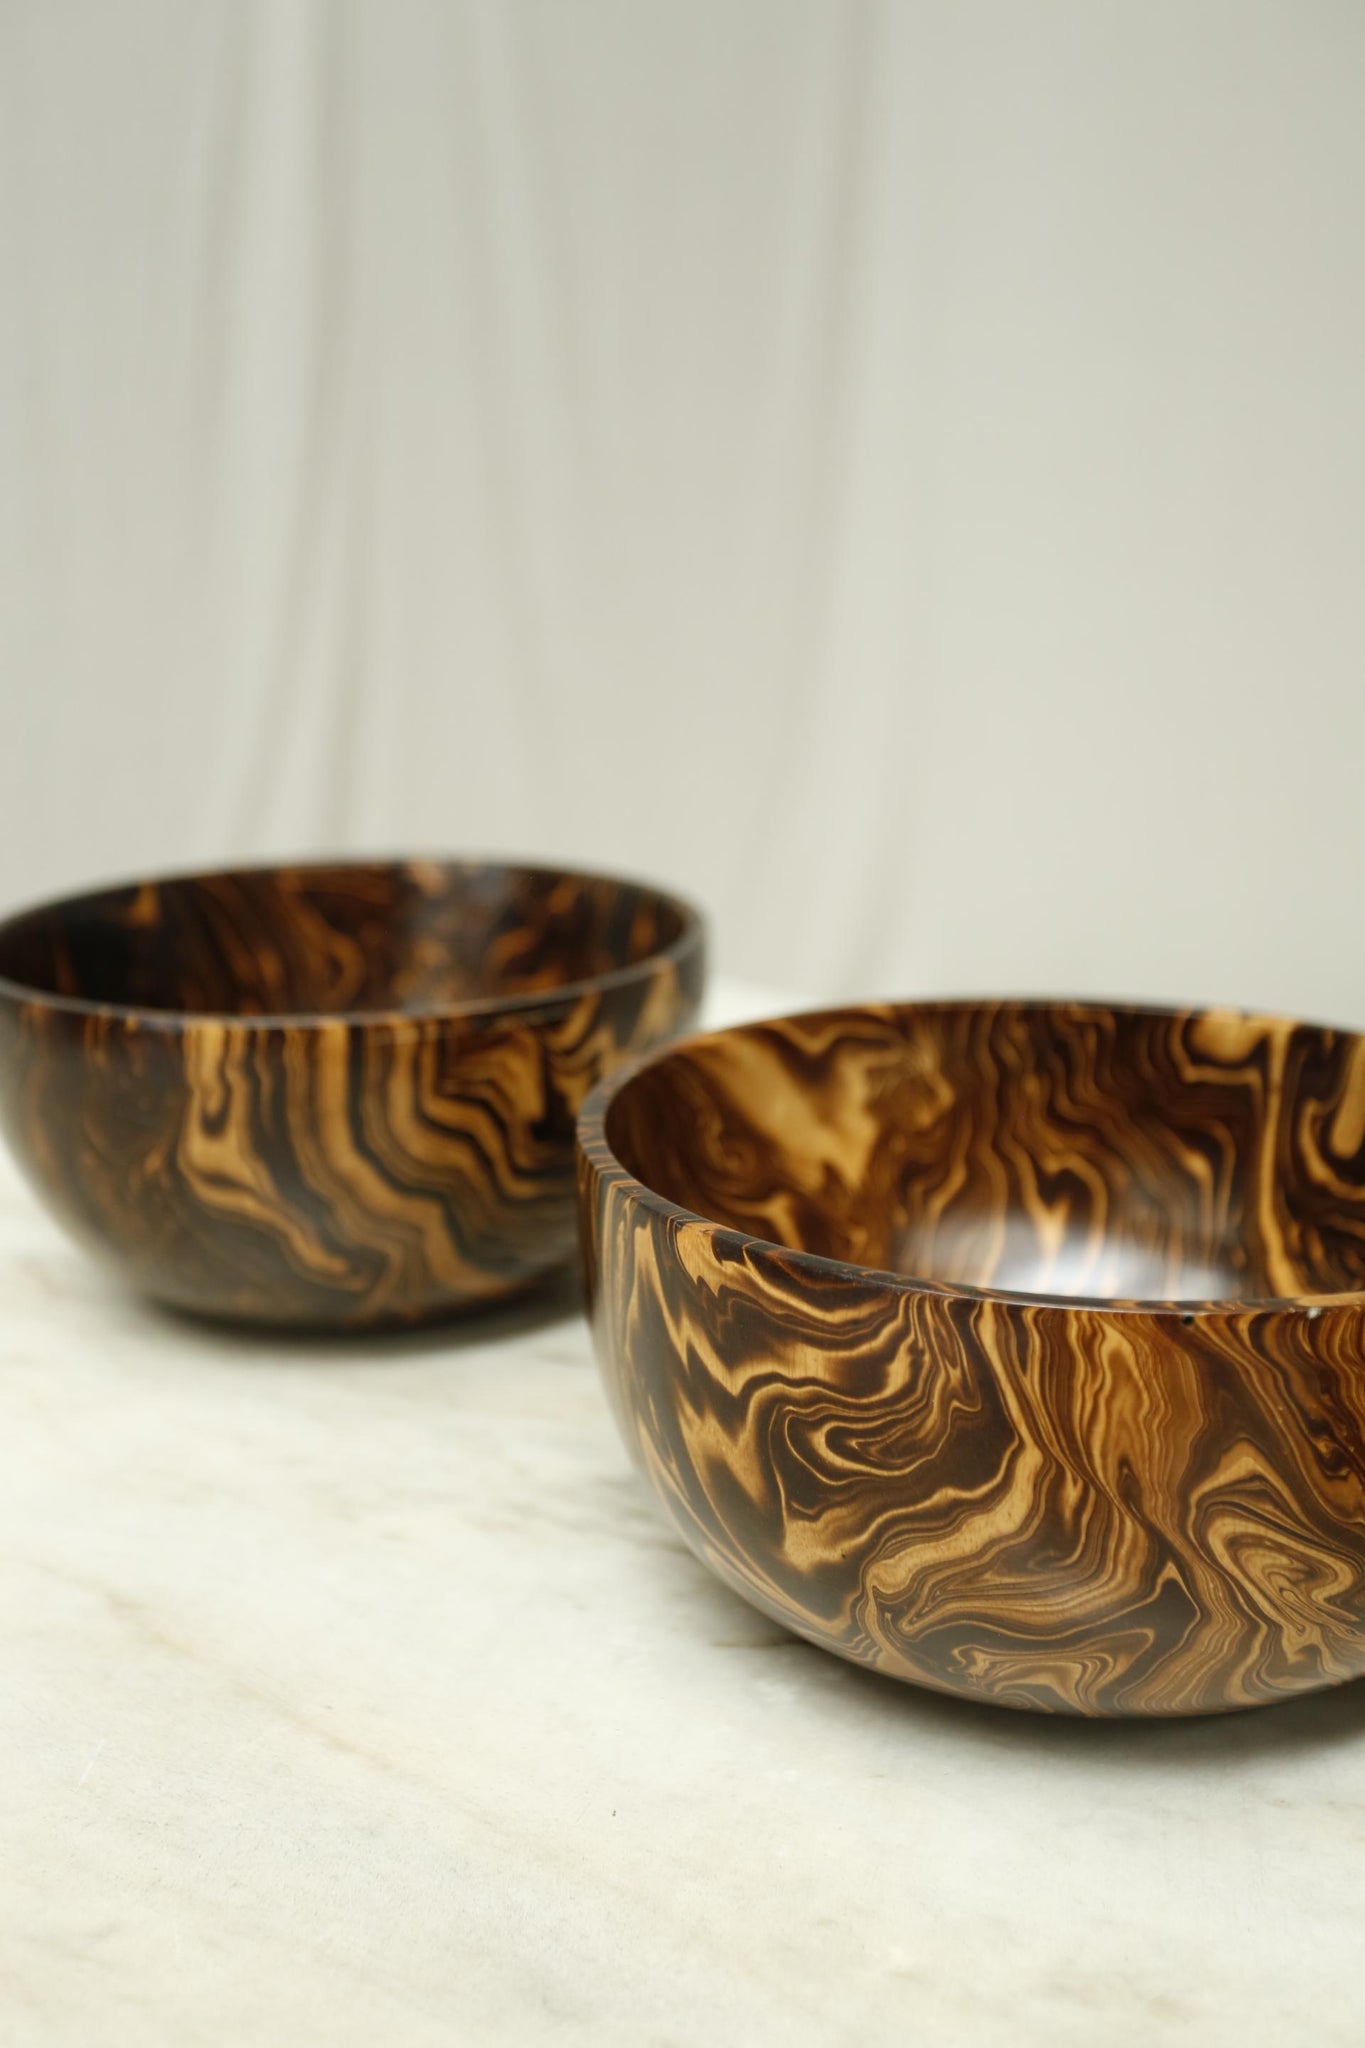 Trio of 20th century Macassar ebony bowls